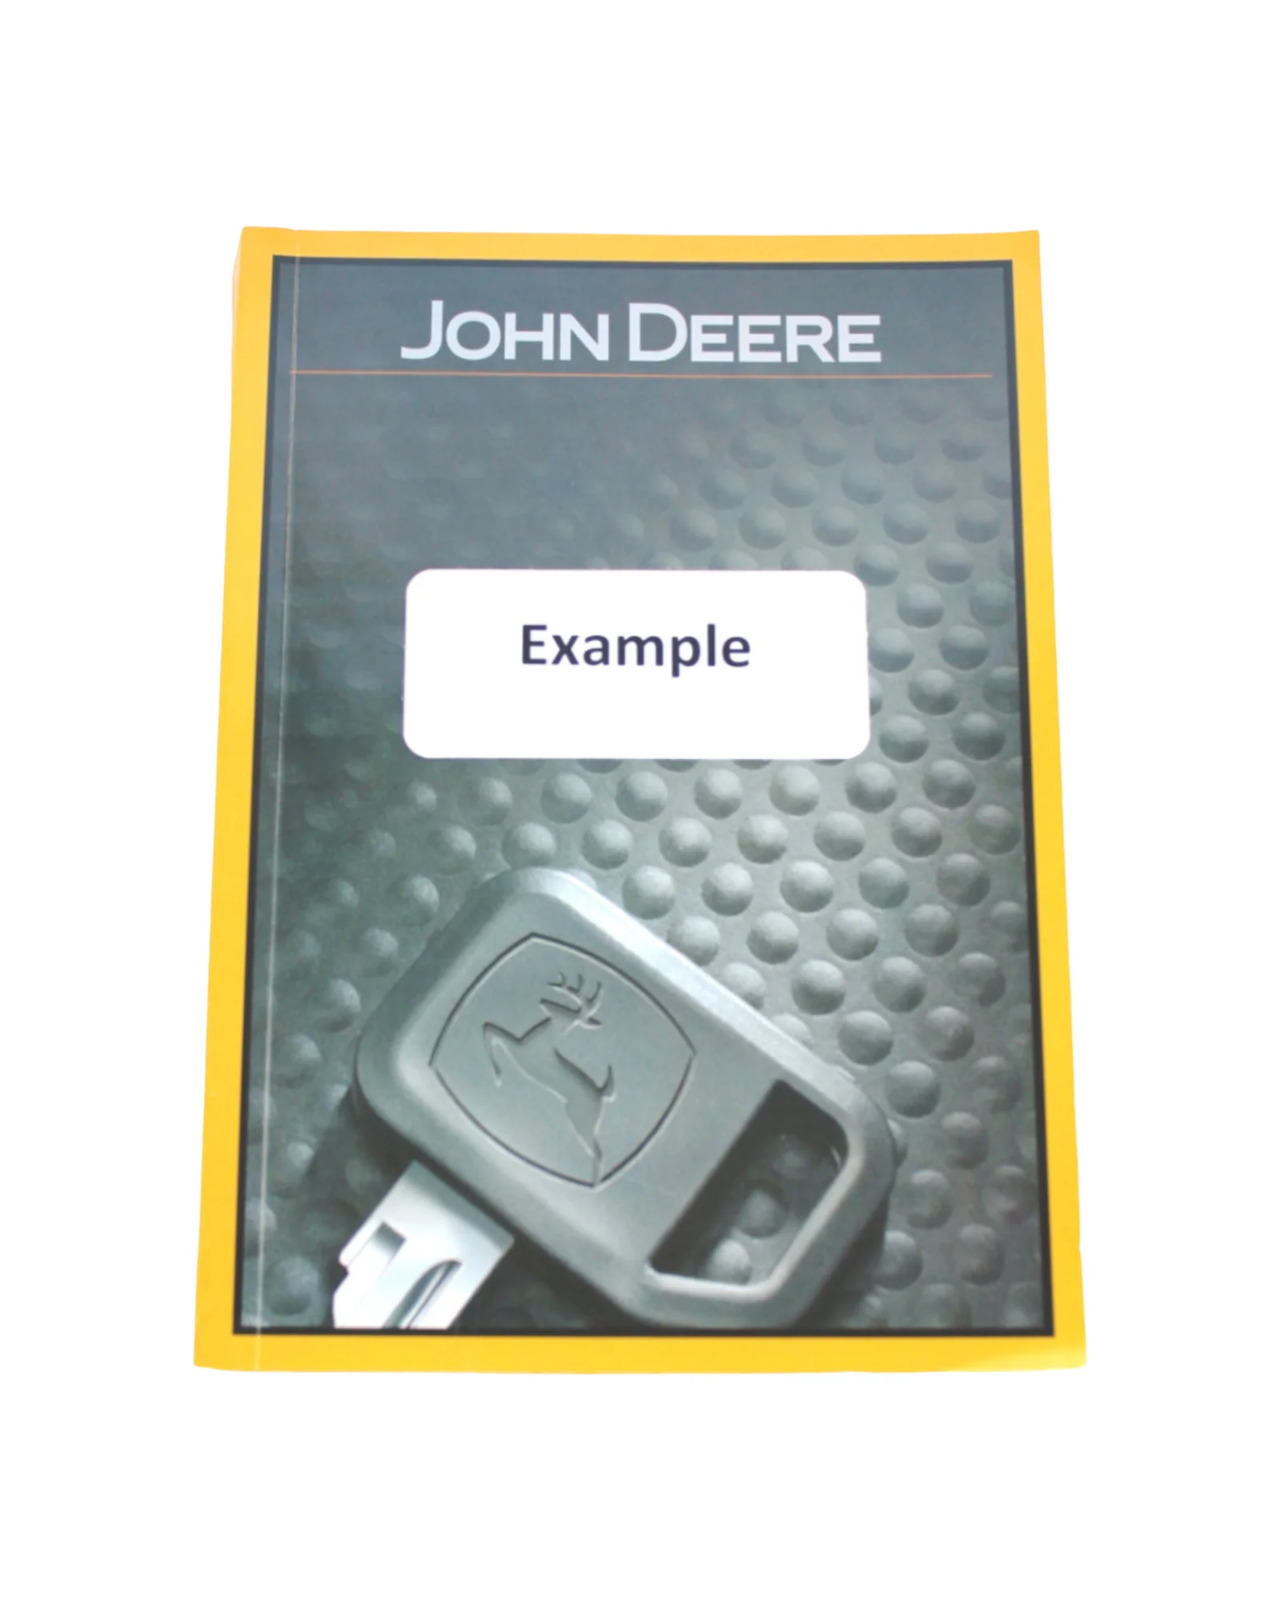 JOHN DEERE 605K CRAWLER LOADER OPERATION TEST SERVICE MANUAL